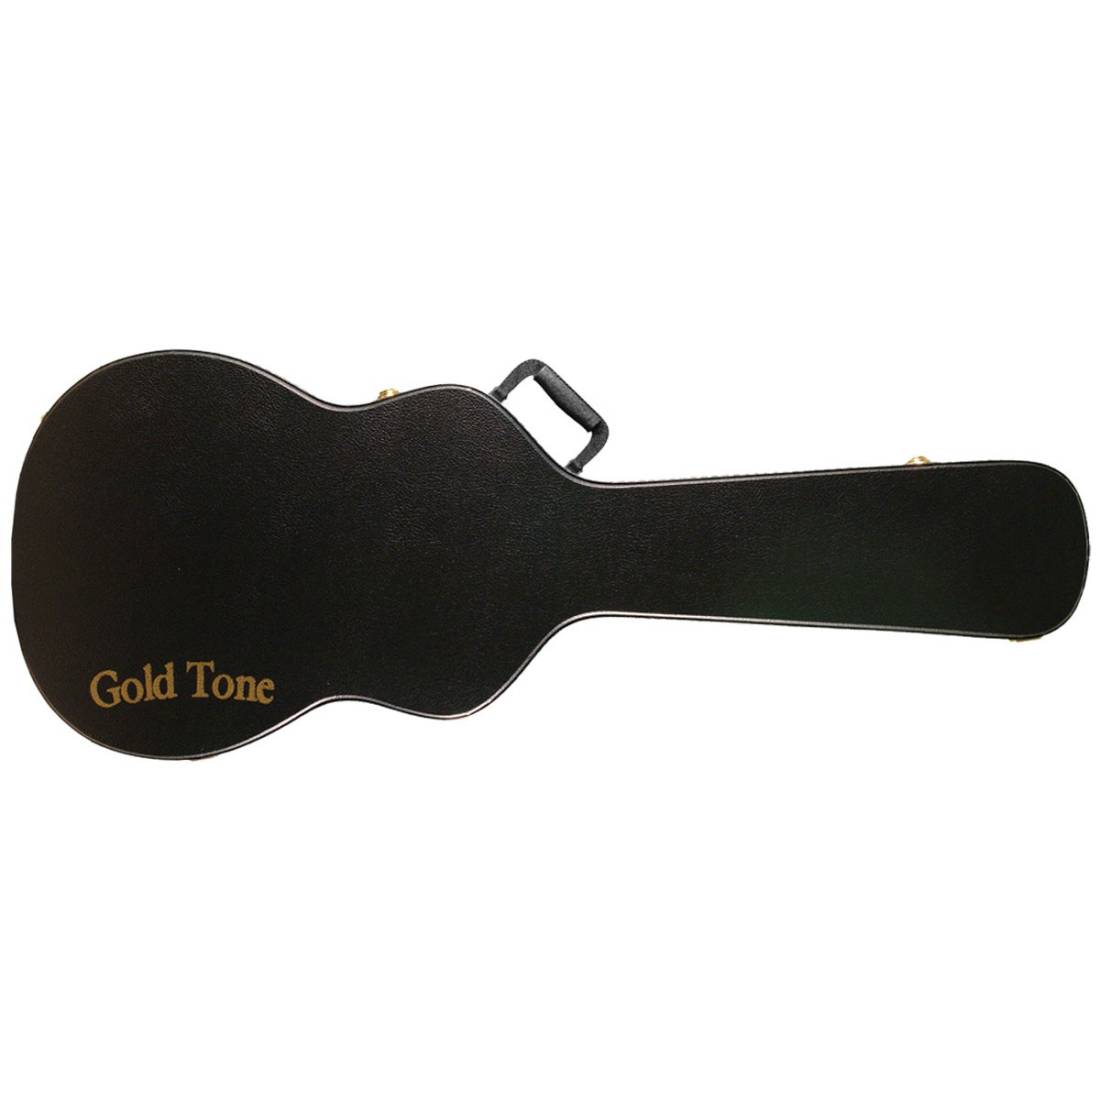 Hard-Shell Case for GRE Metal Body Resonator Guitar